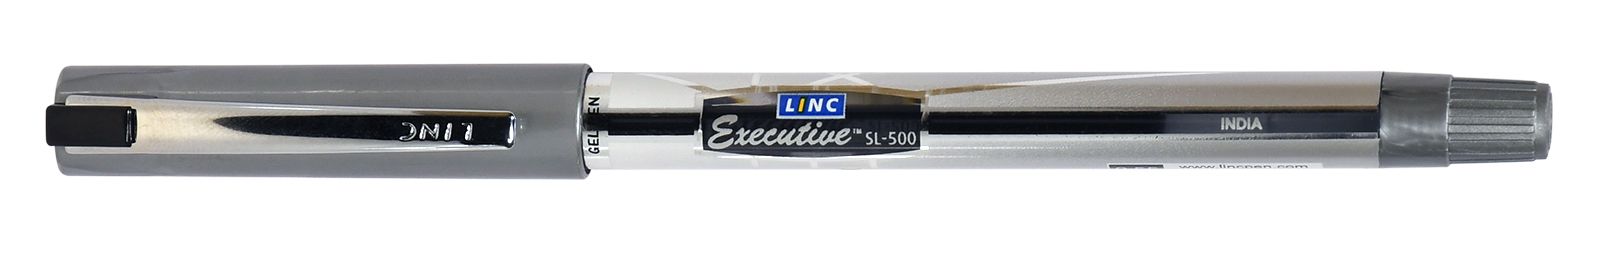   Linc Executive SL 0,55  ,   